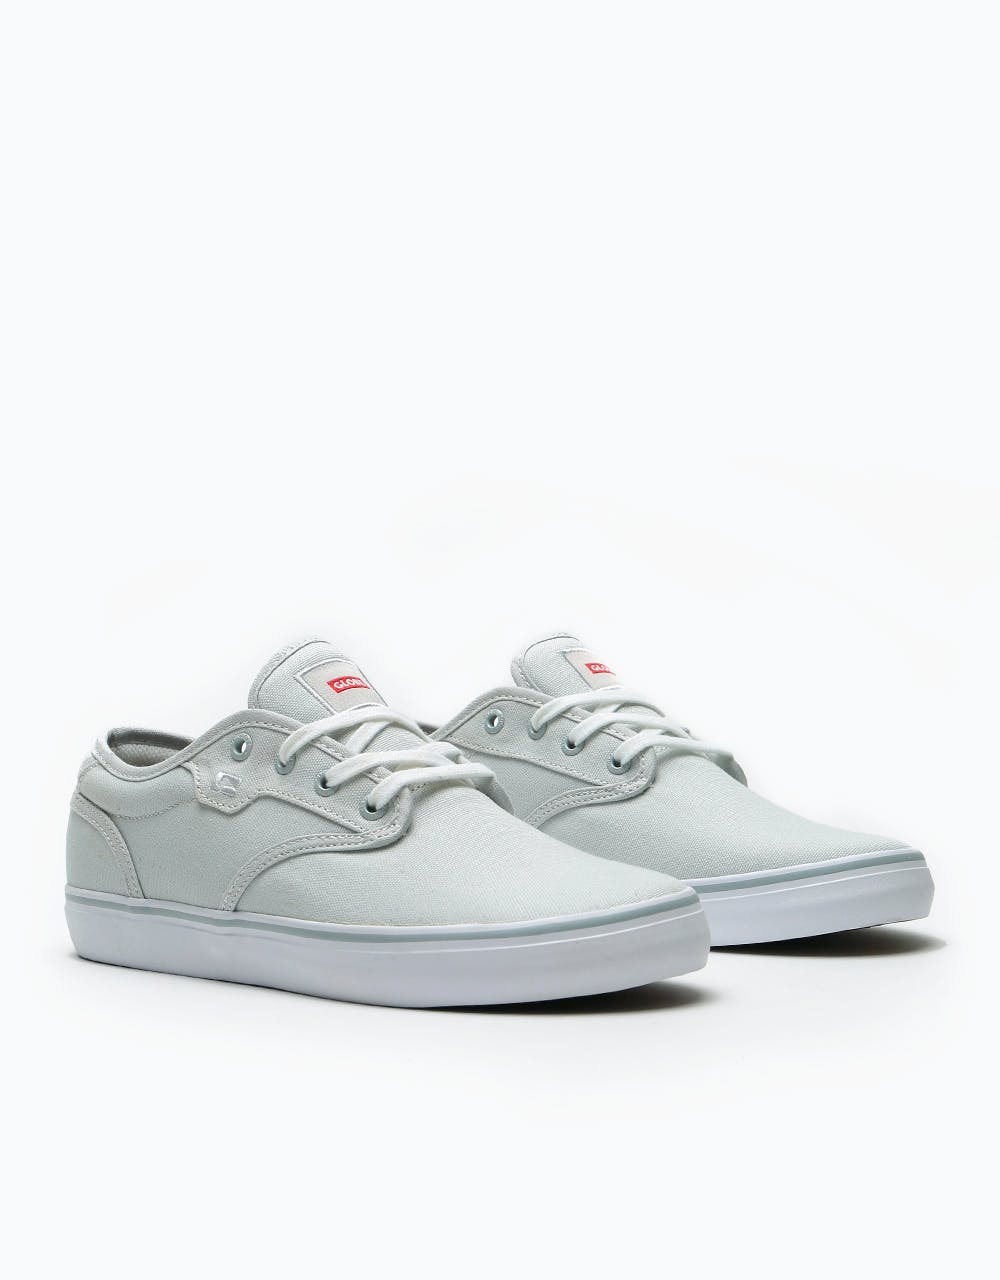 Globe Motley Skate Shoes - Grey Canvas/White